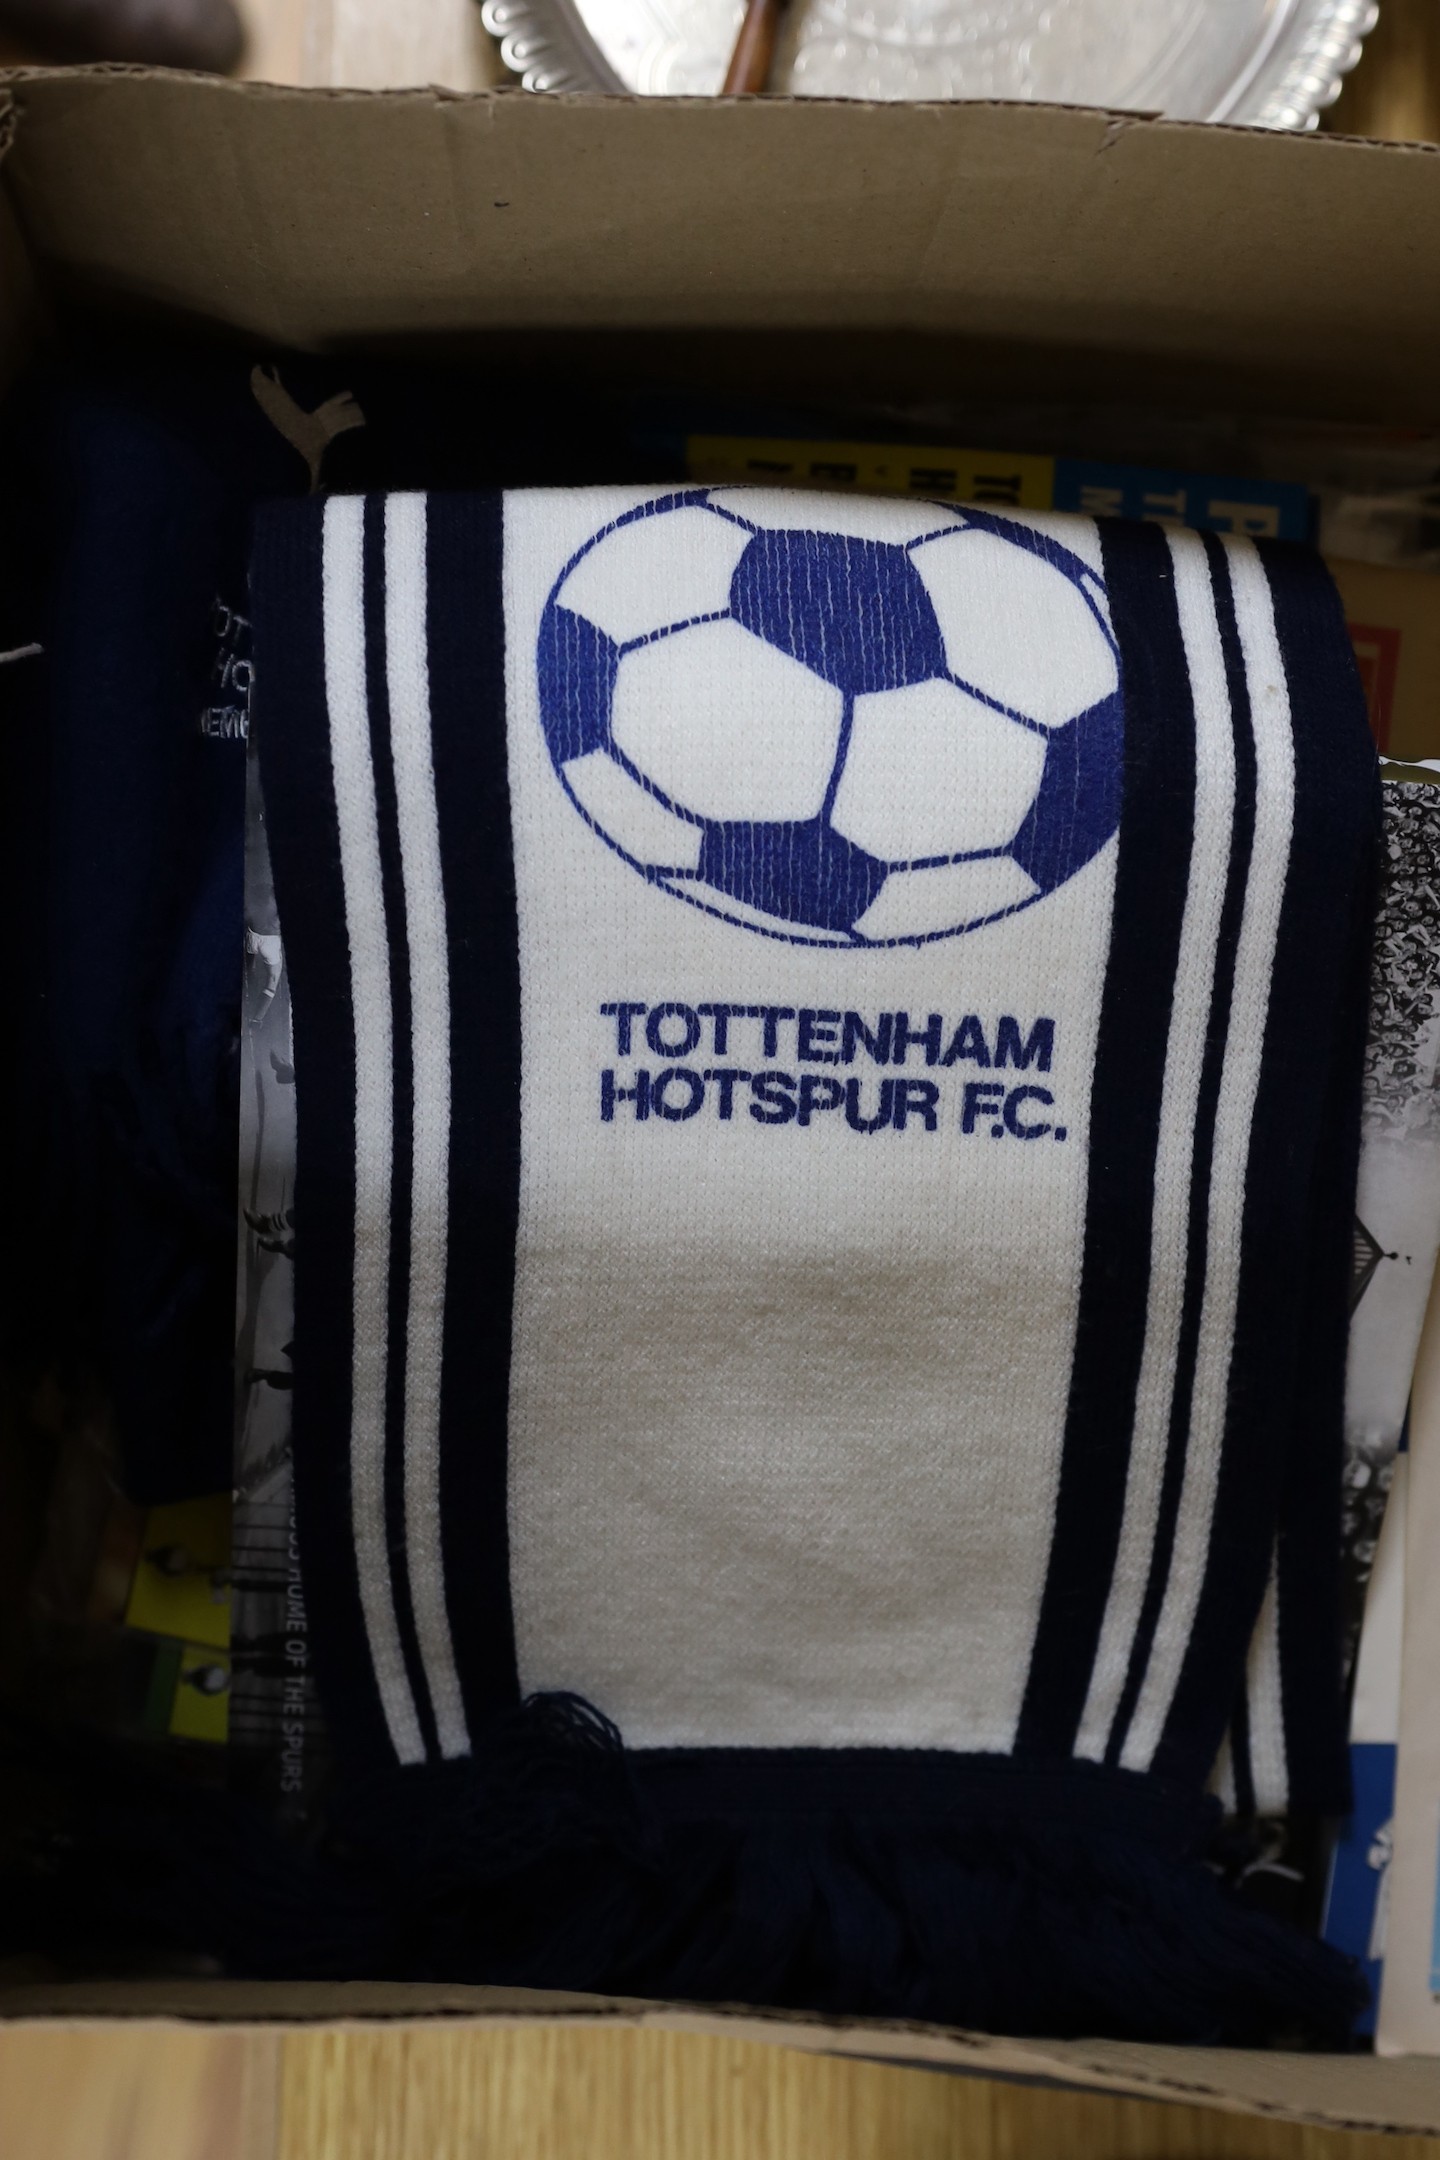 Tottenham Hotspur FC programmes and memorabilia - Image 3 of 3